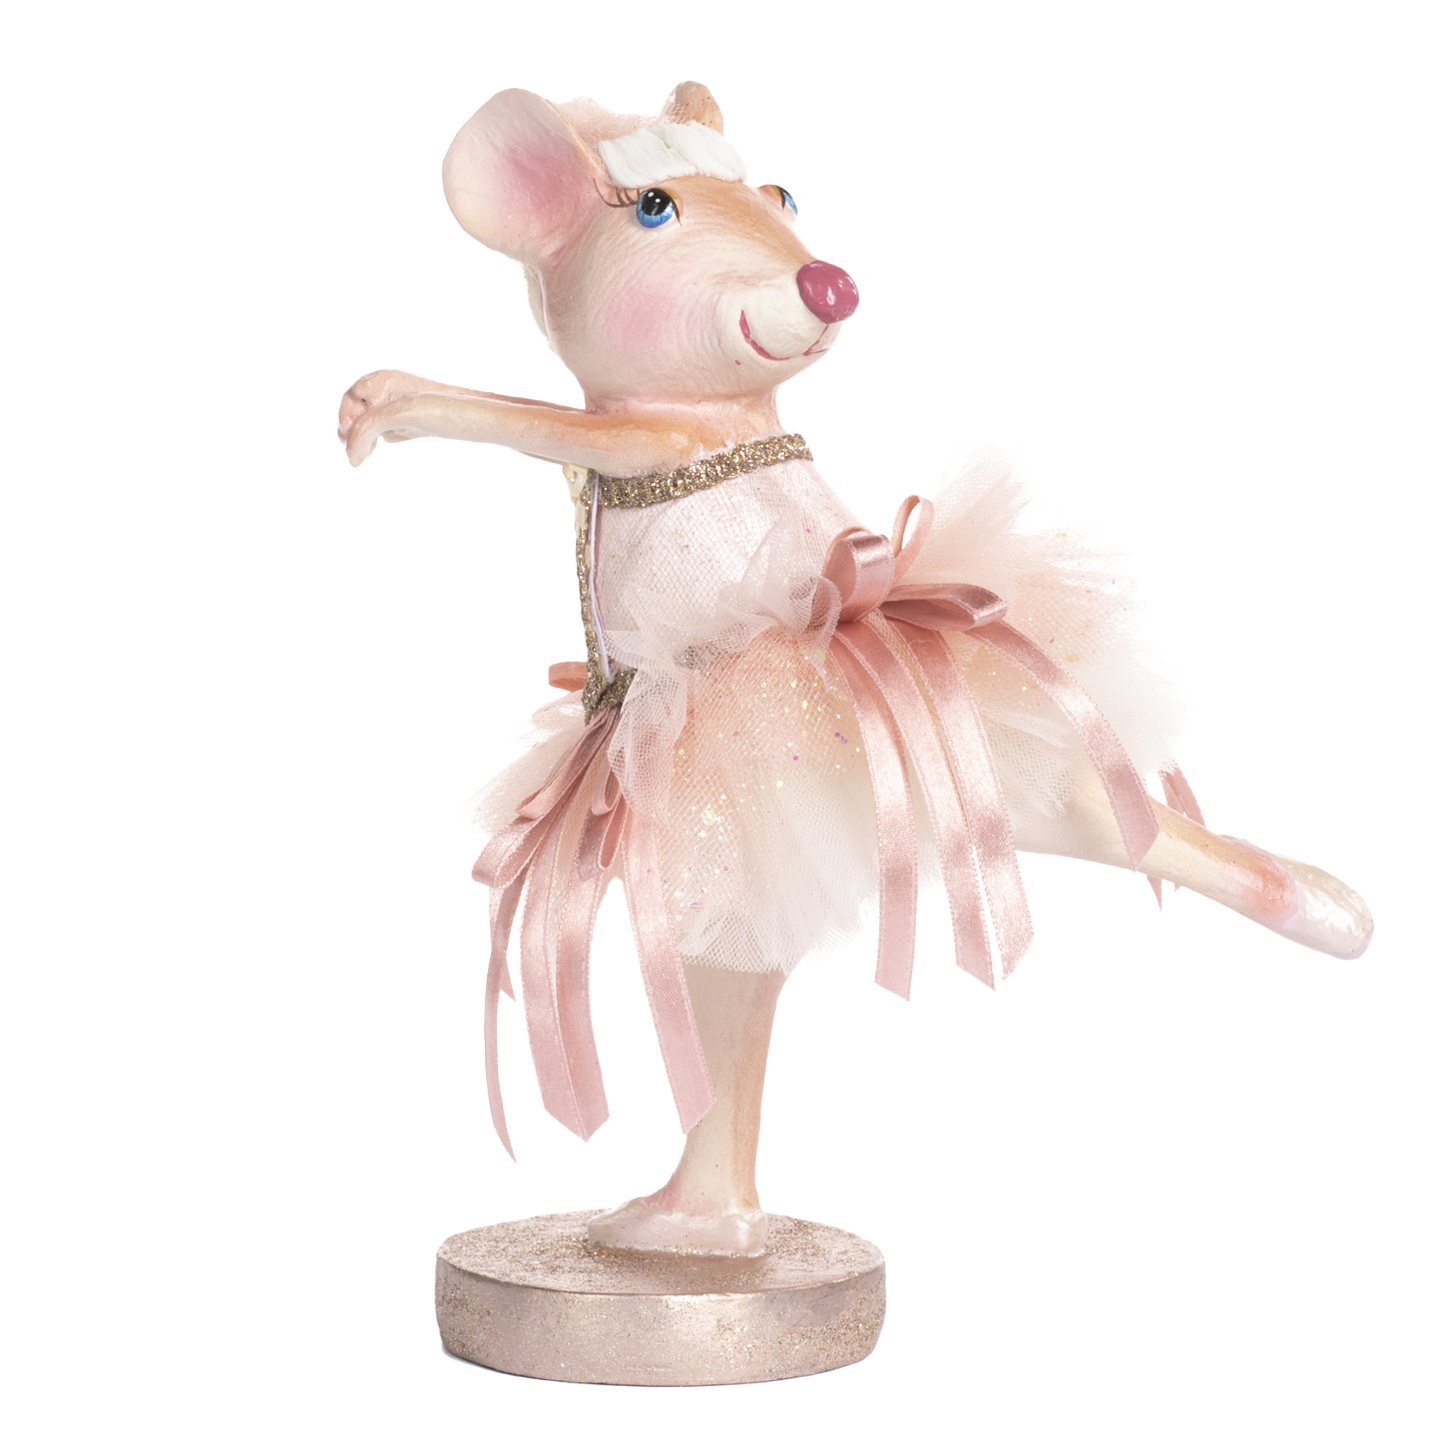 Goodwill M&G Kerst Decoratiebeeld - Ballerina muis - roze - 23cm